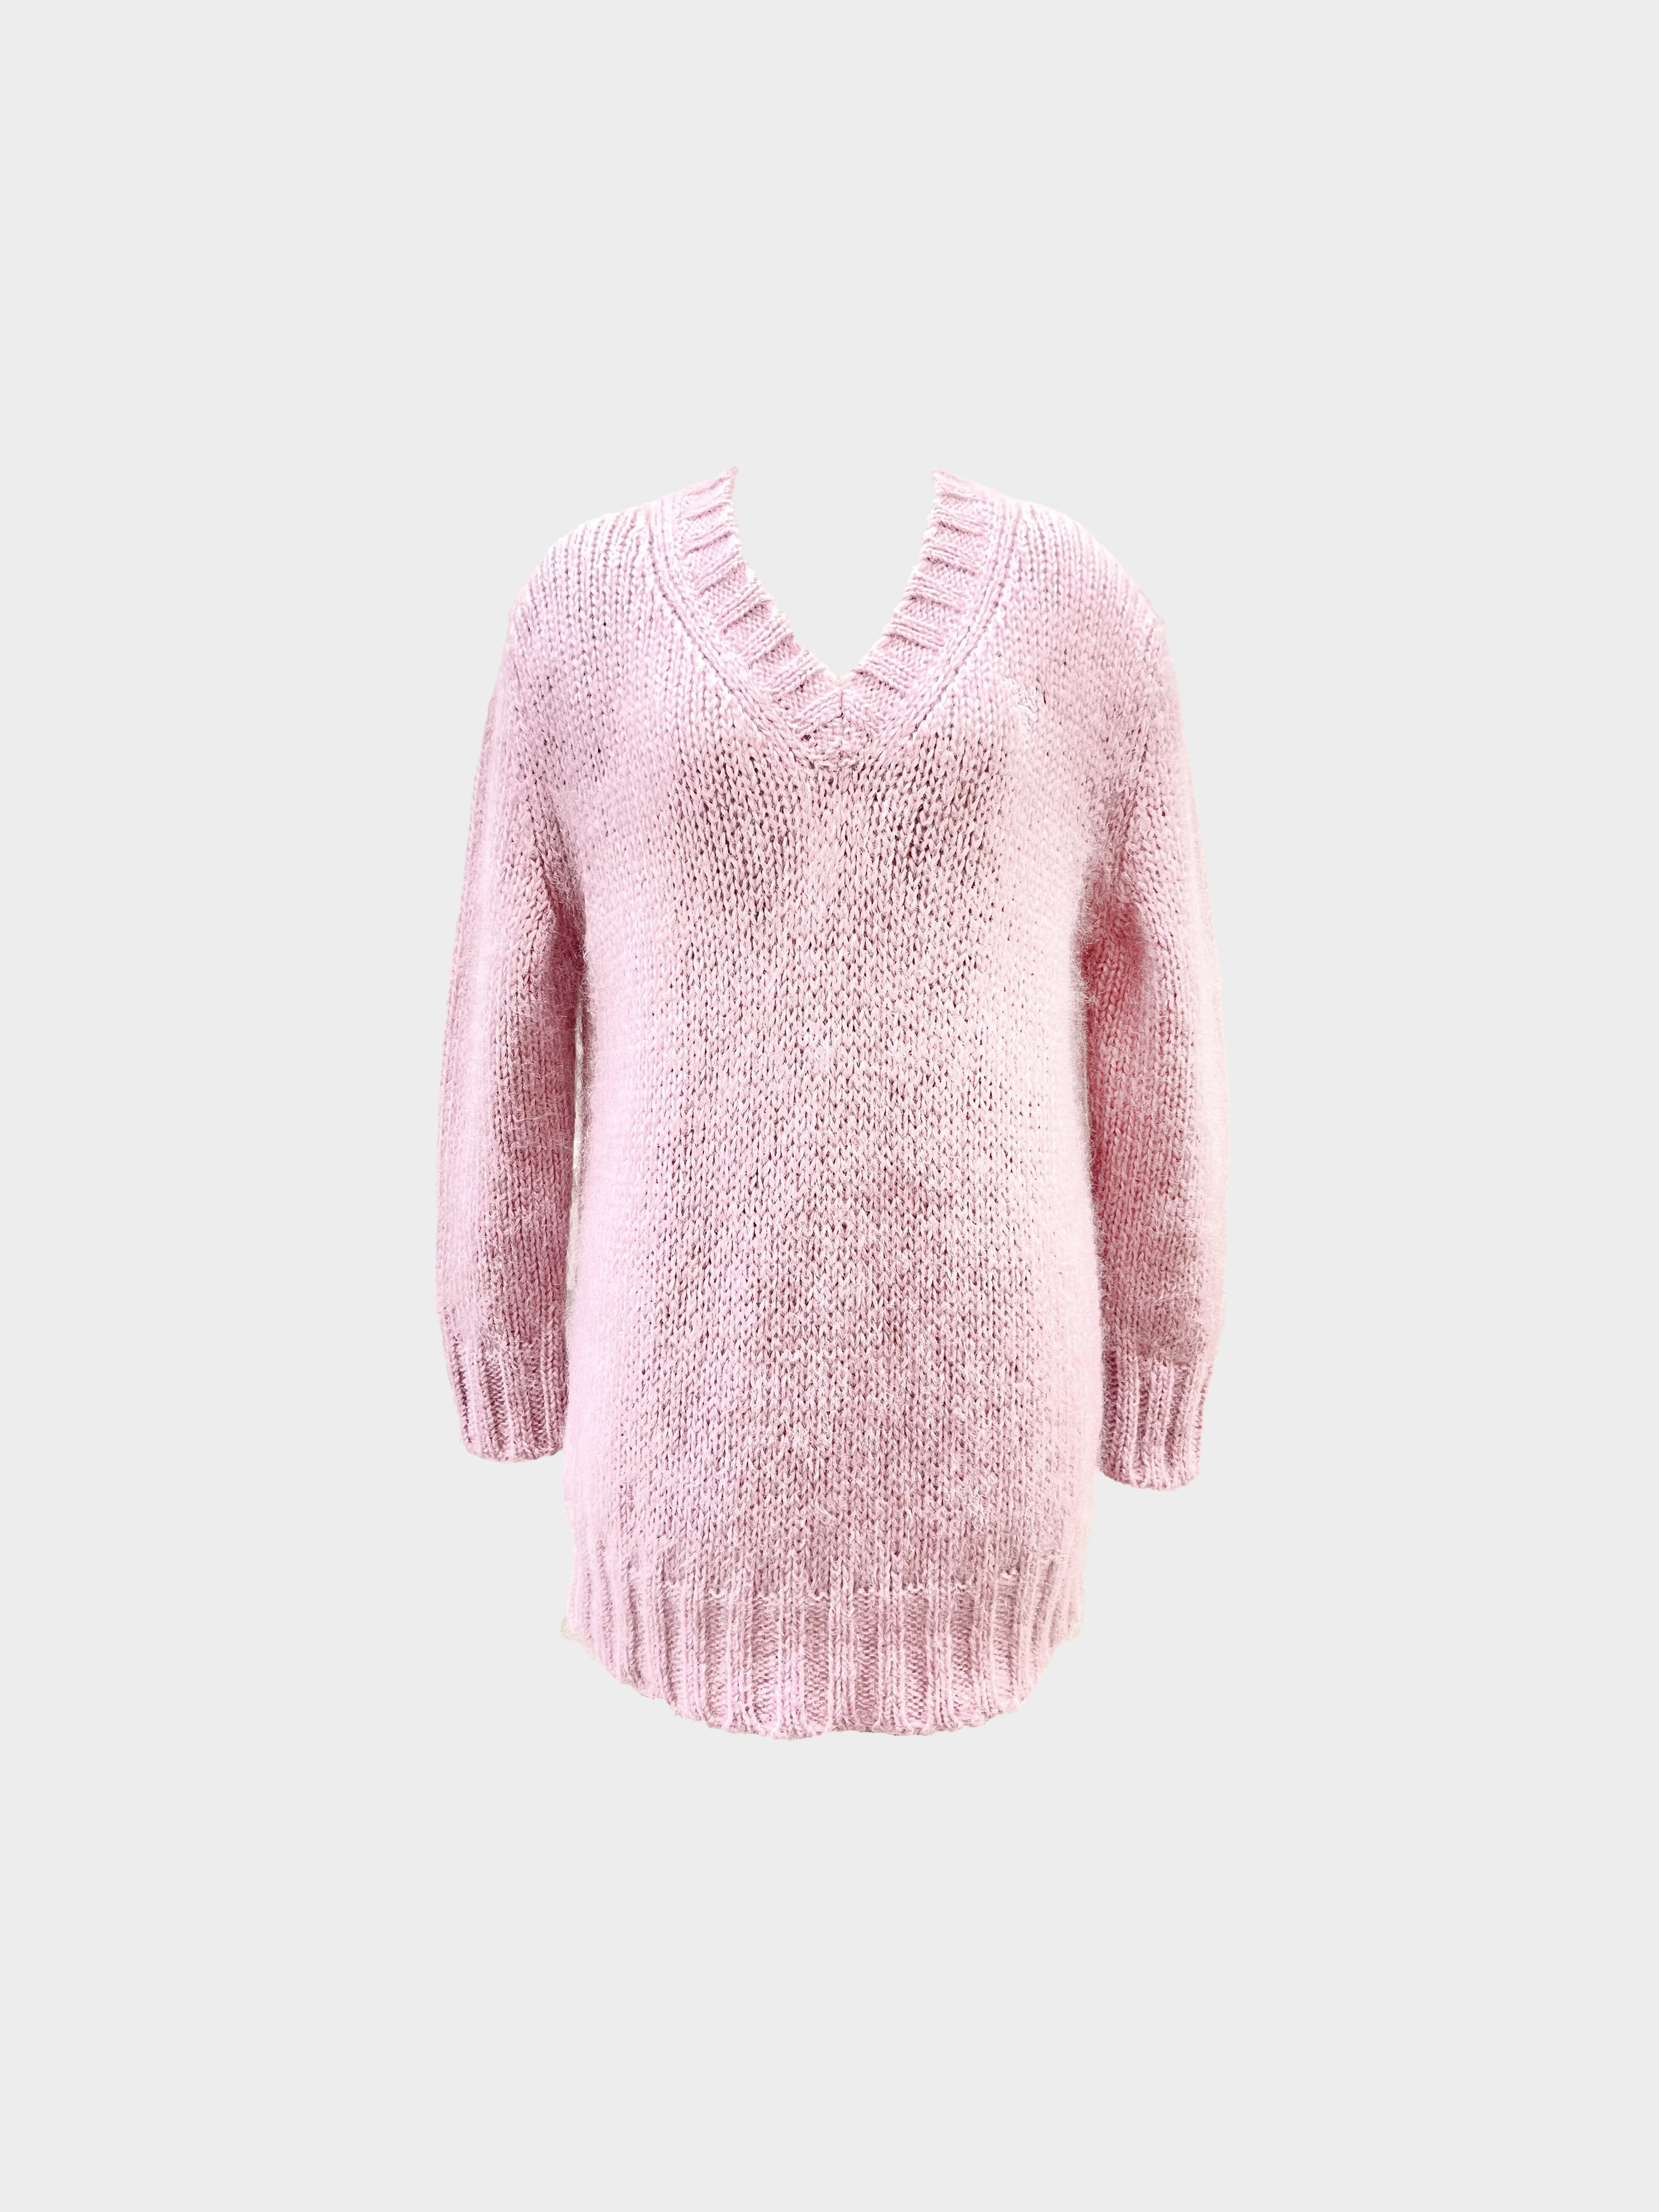 Prada 2010s Pink Oversized Mohair-Blend Sweater